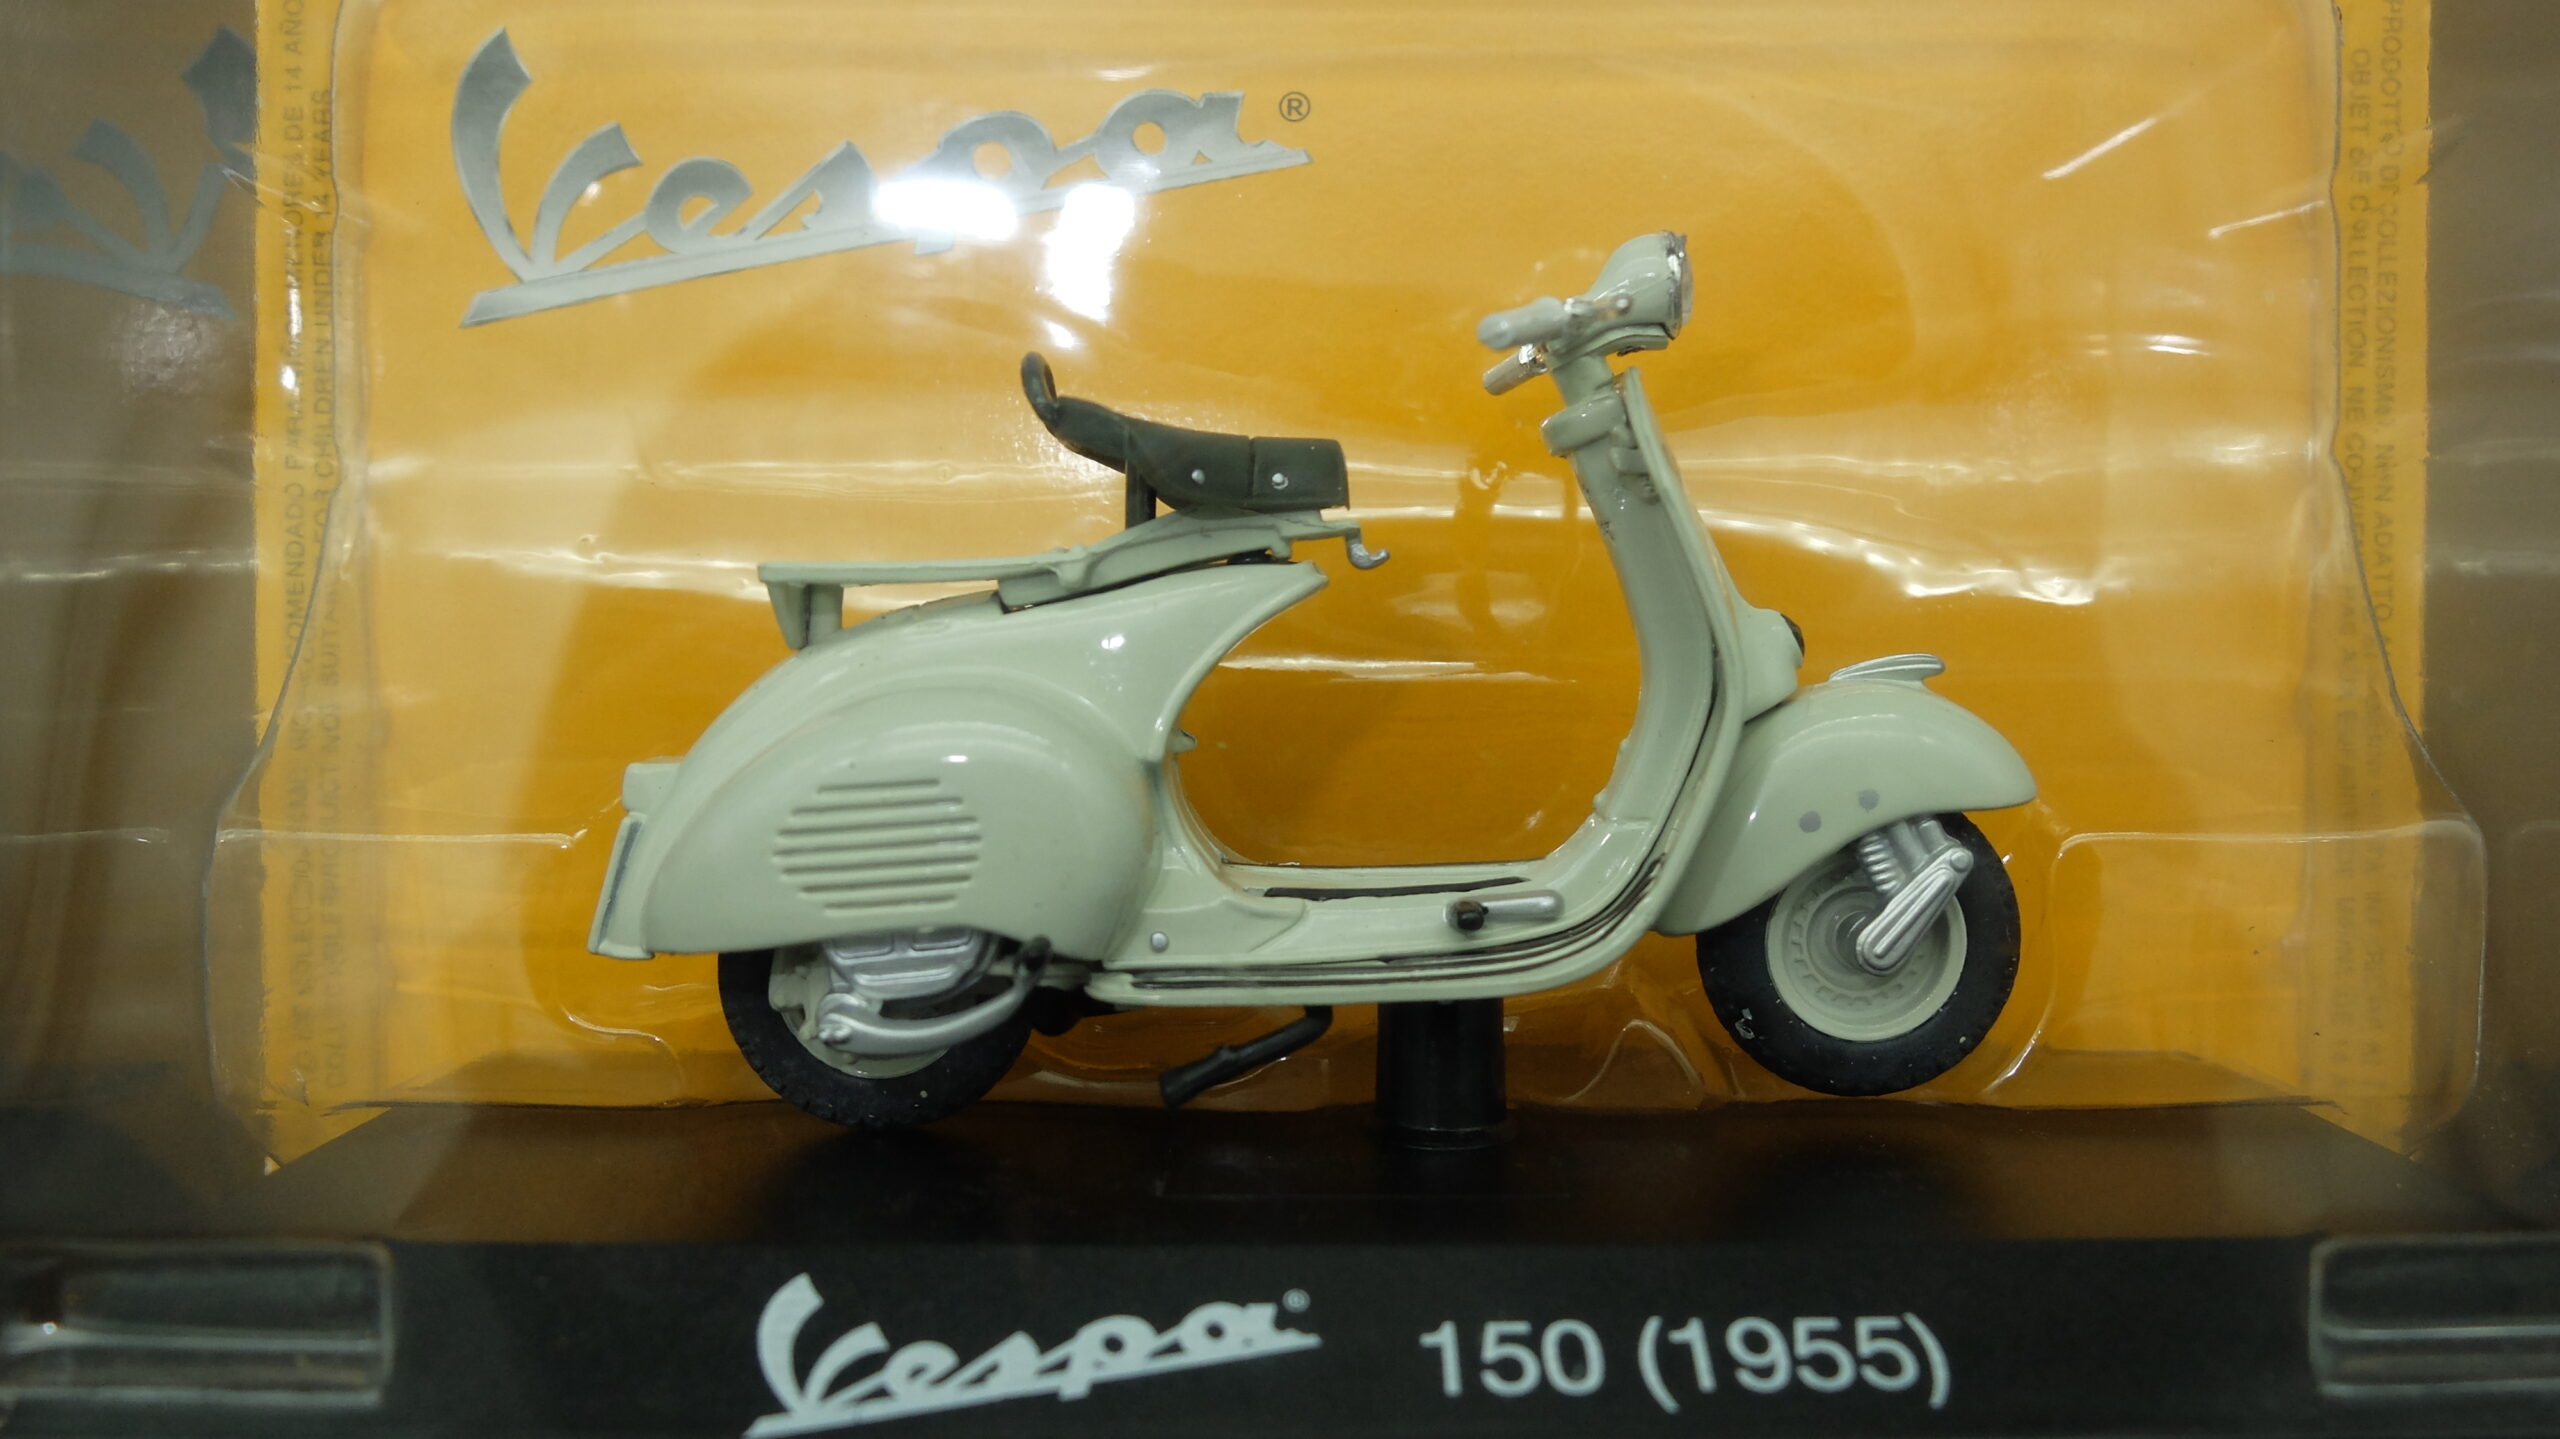 vespa 150 1955 scale models 1:18 vehiclesroadcollectiondiecast bike